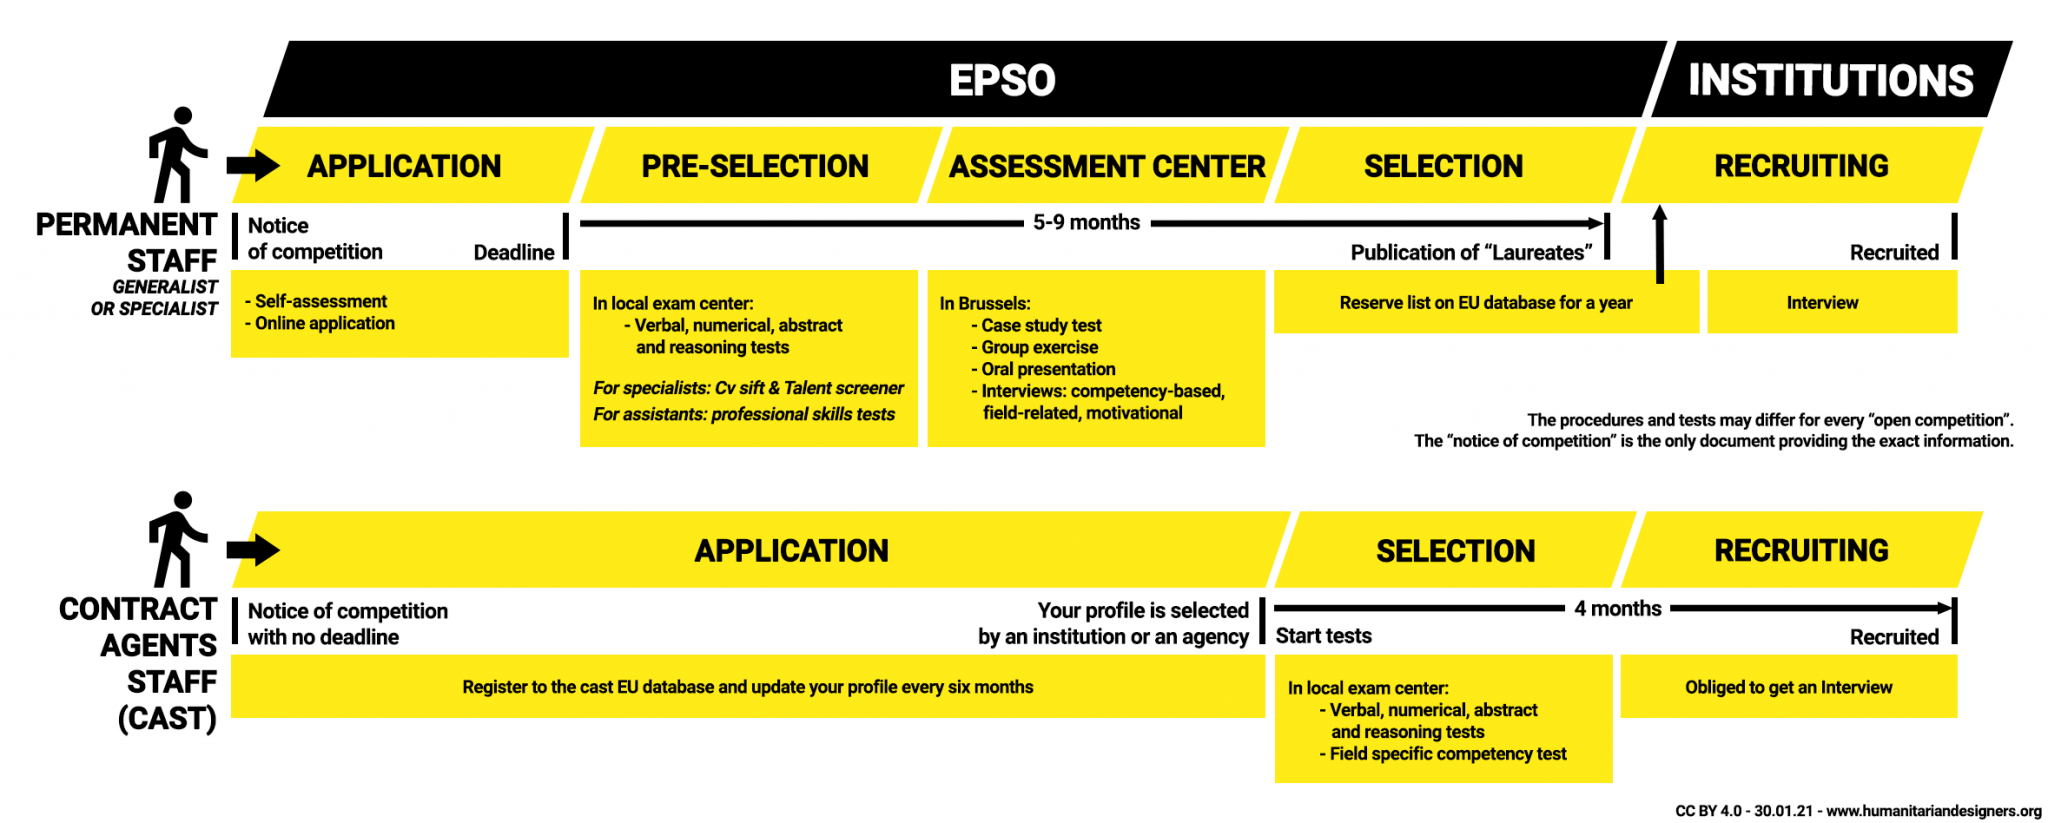 EPSO Selection process - Civil servant EU Permanent staff and contract agents CAST